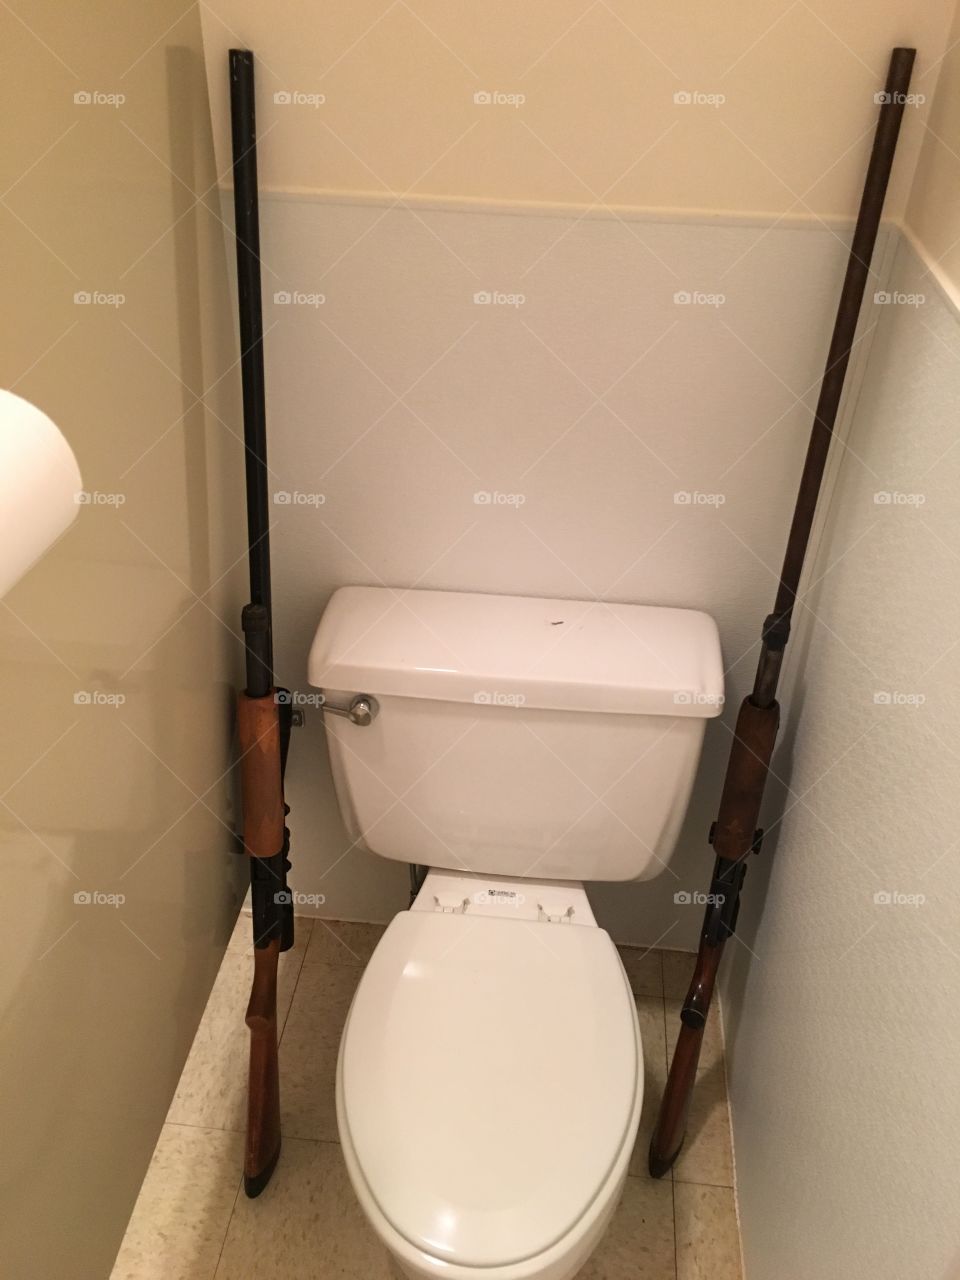 Toilet with shot guns